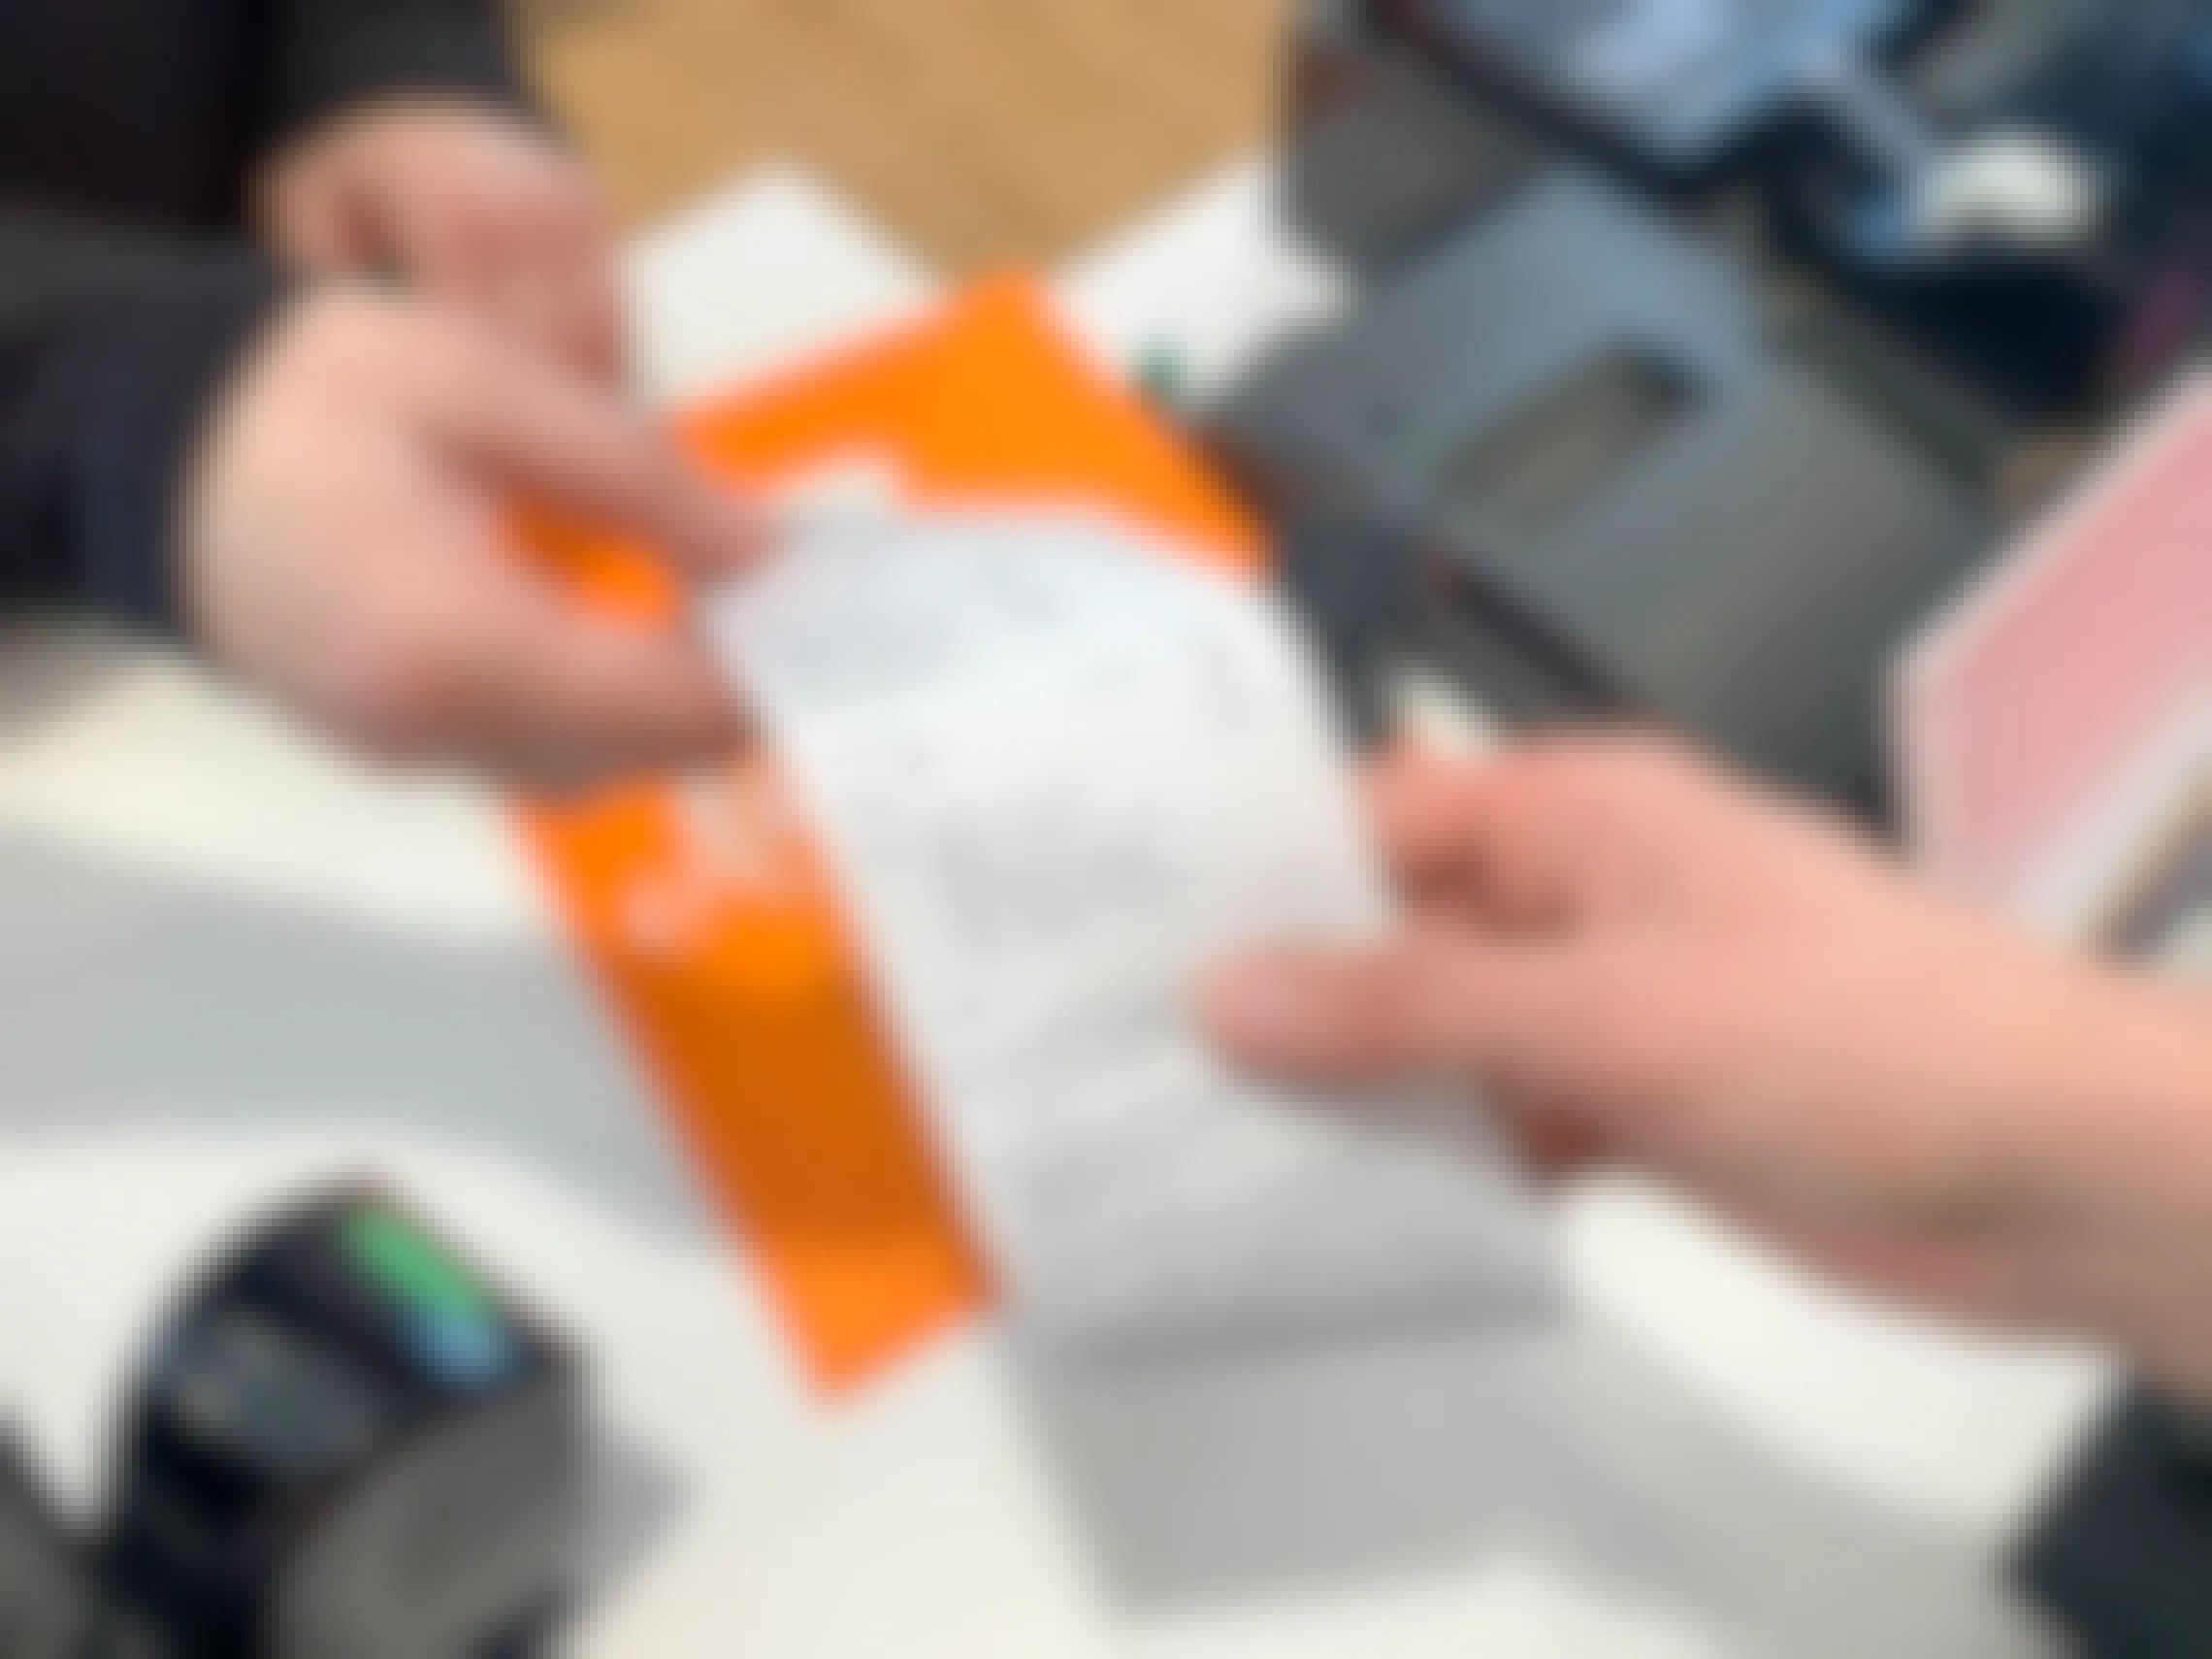 An Ulta employee handing a receipt to a customer at checkout in the Ulta store